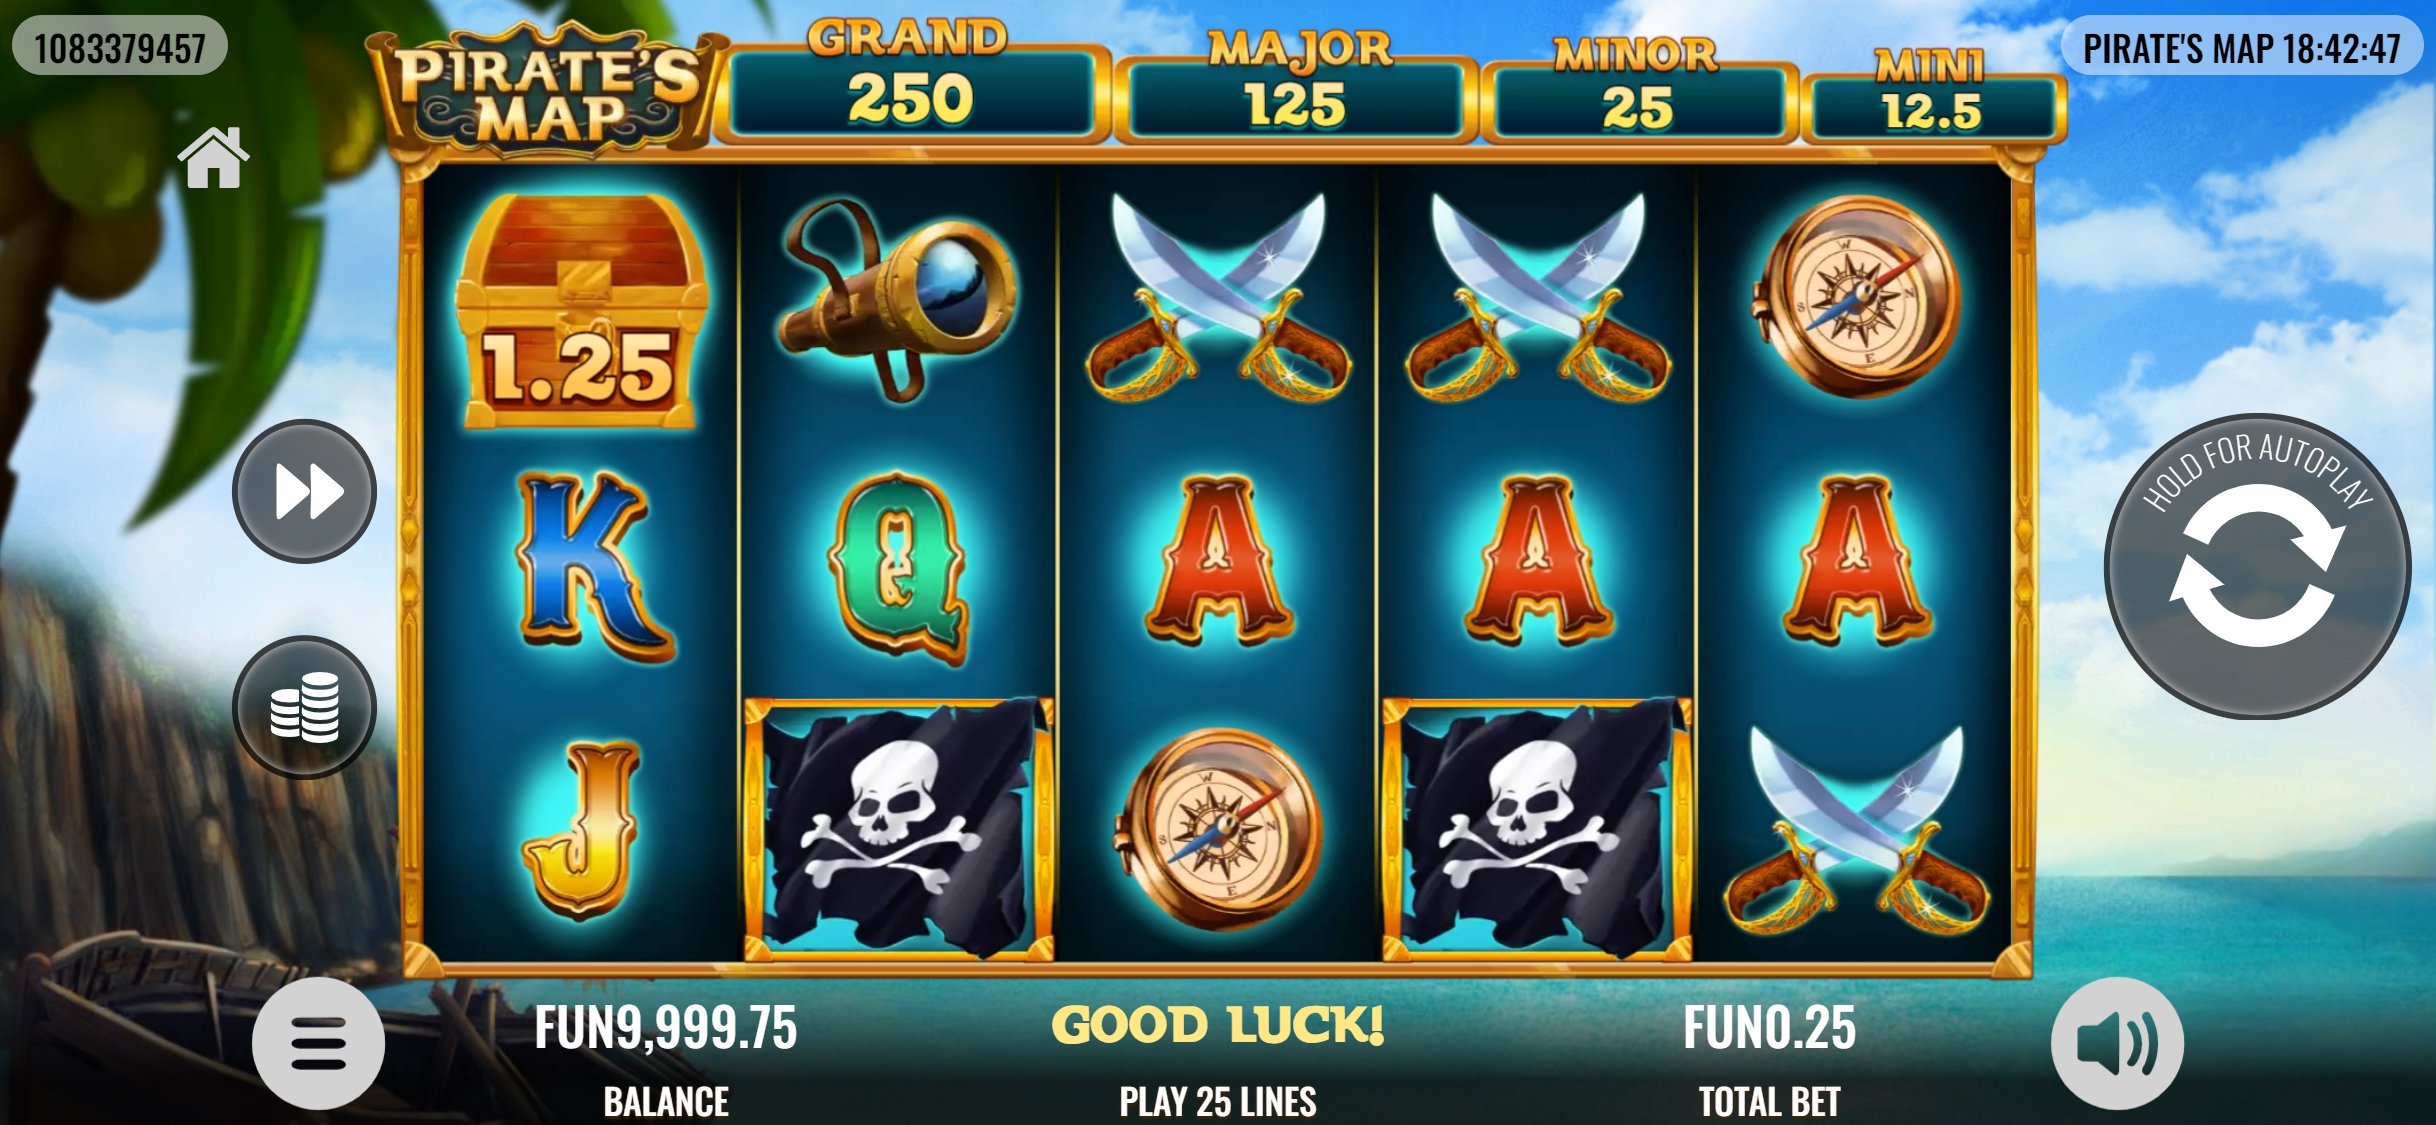 Casino Adrenaline Mobile Slot Games Review